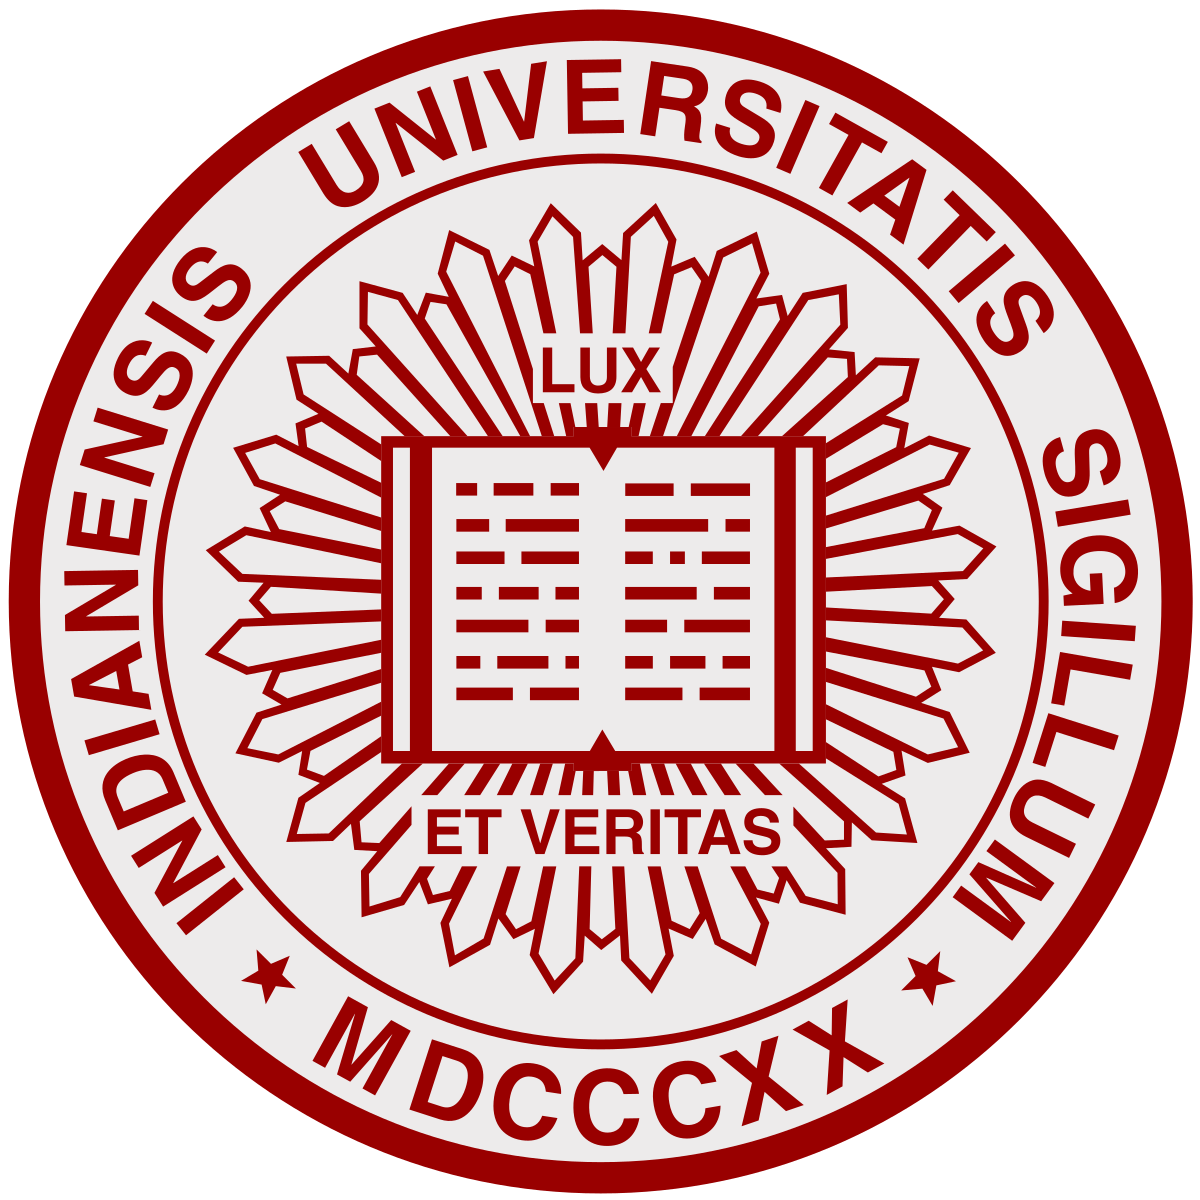 Indiana University Bloomington Logo - Indiana University Bloomington